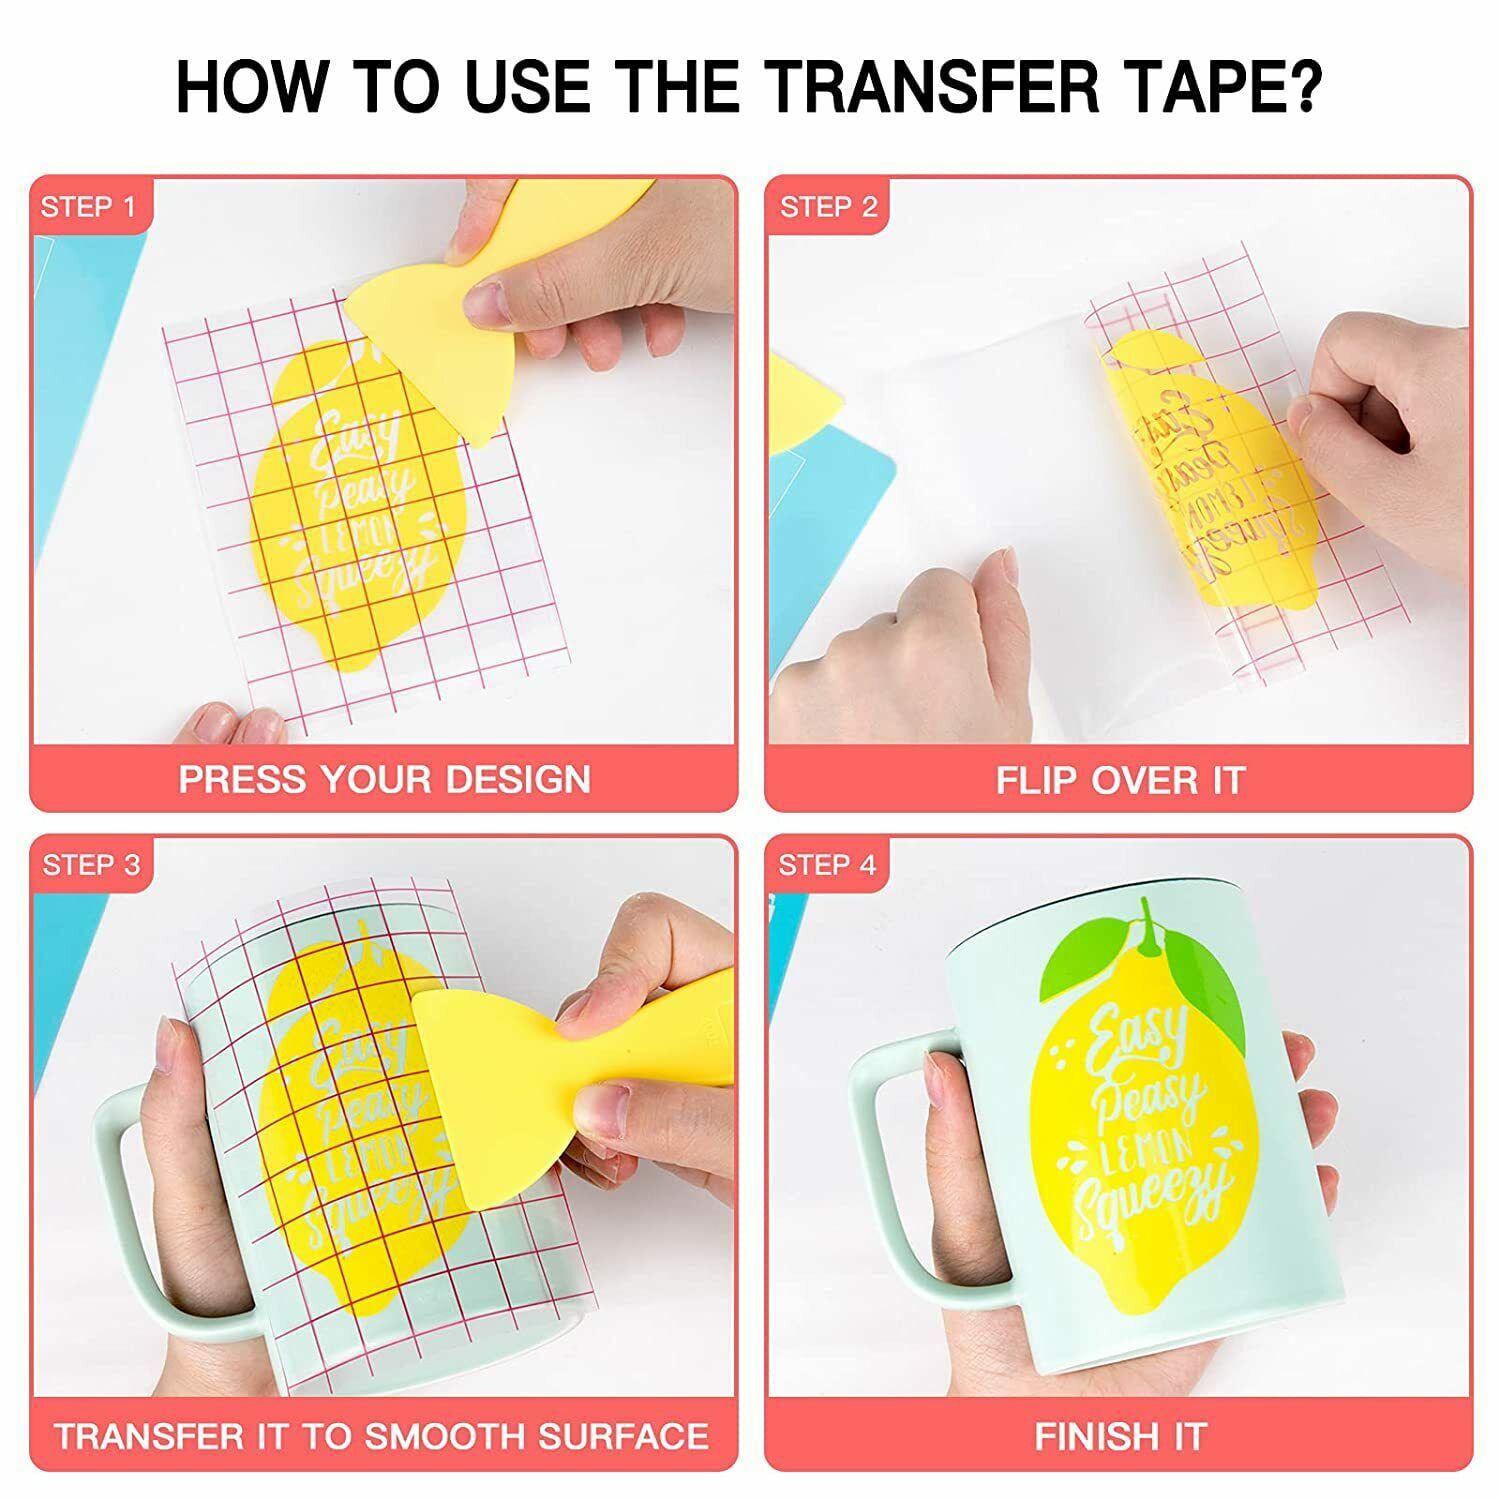 Adhesive Vinyl and Transfer Tape tips! #learnontiktok